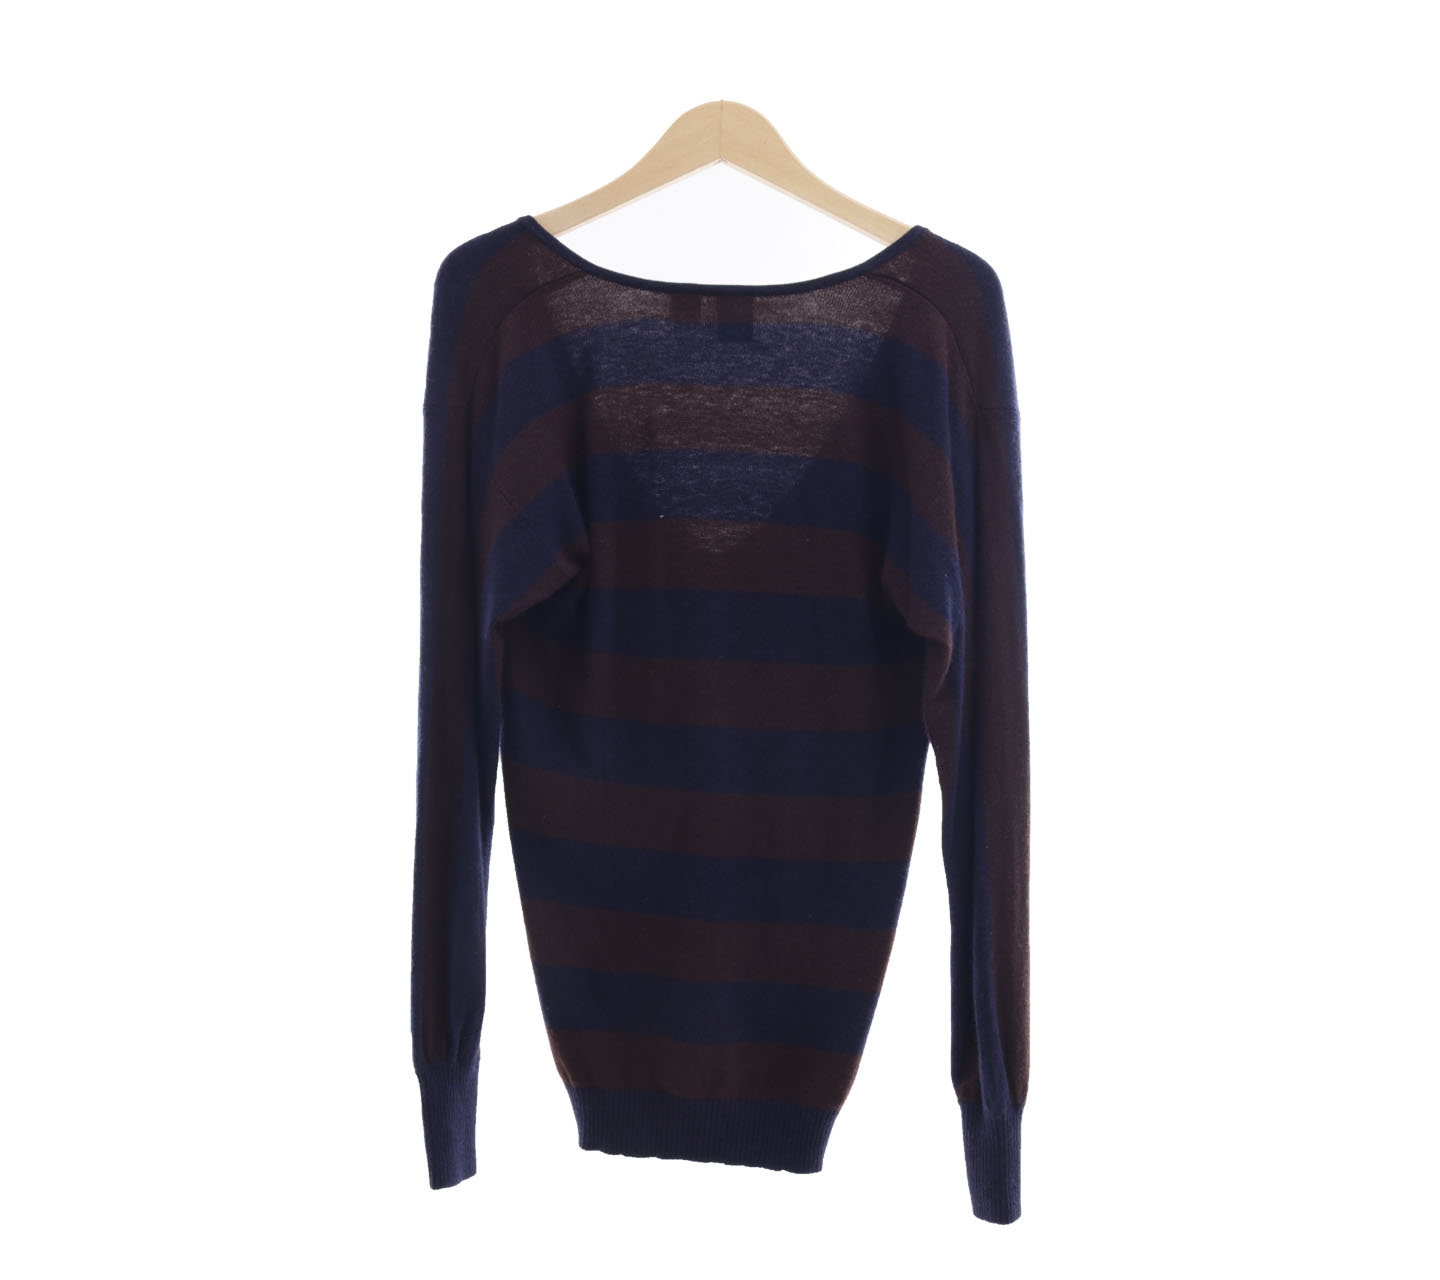 Barneys new york Brown & Navy Striped Sweater